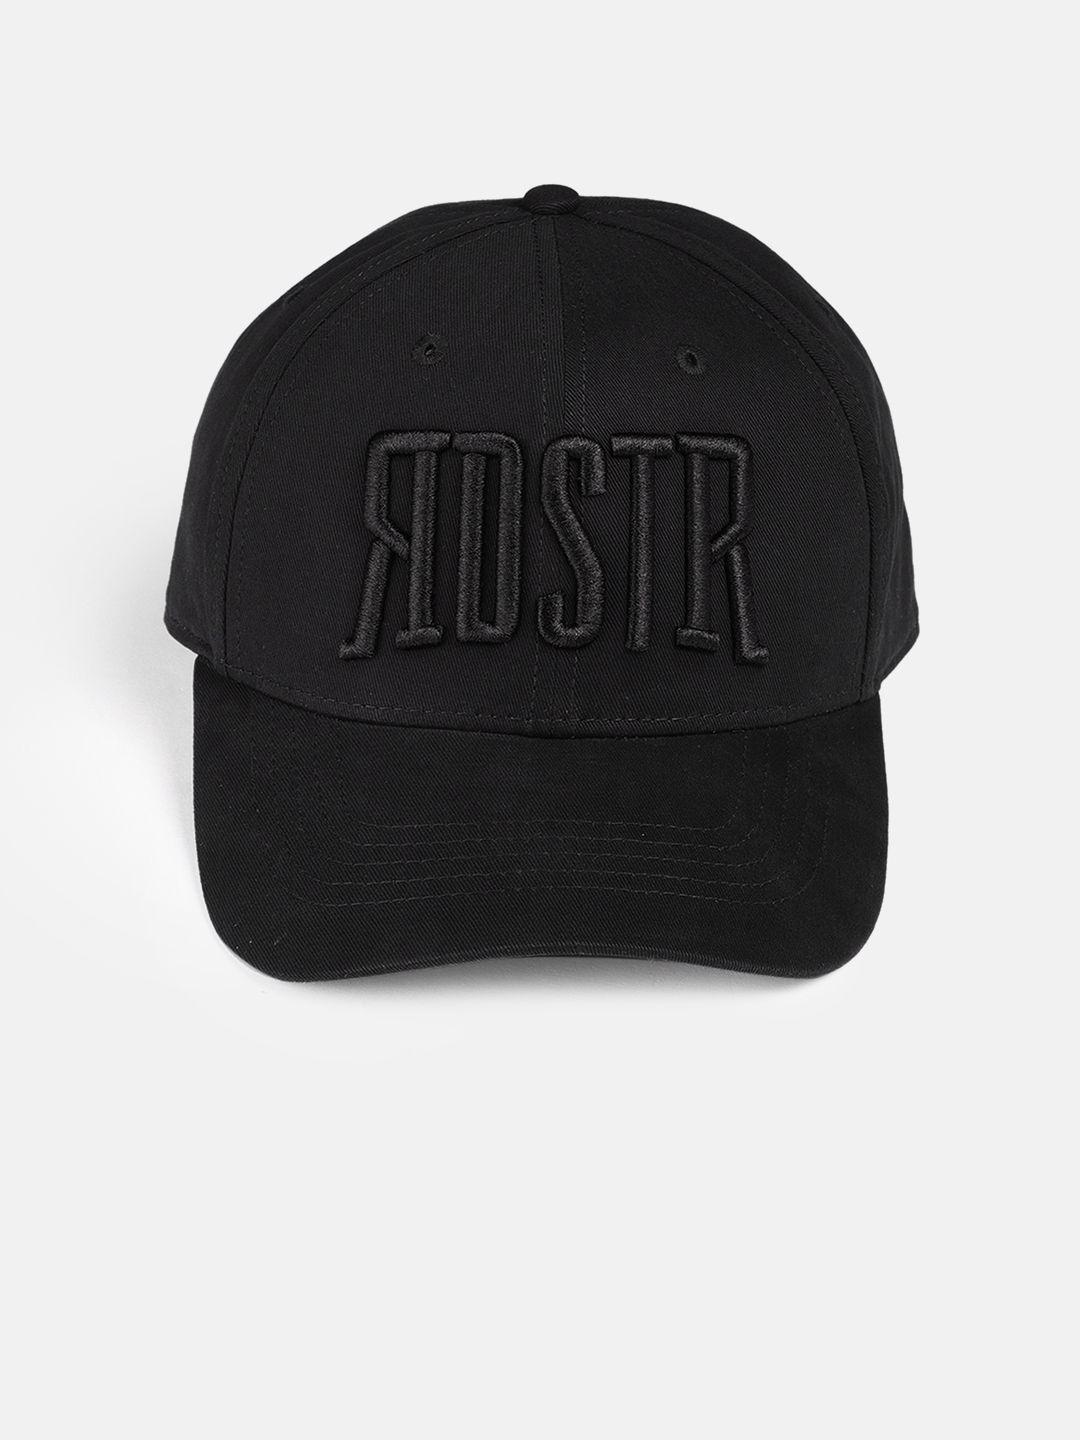 roadster unisex black embroidered baseball cap